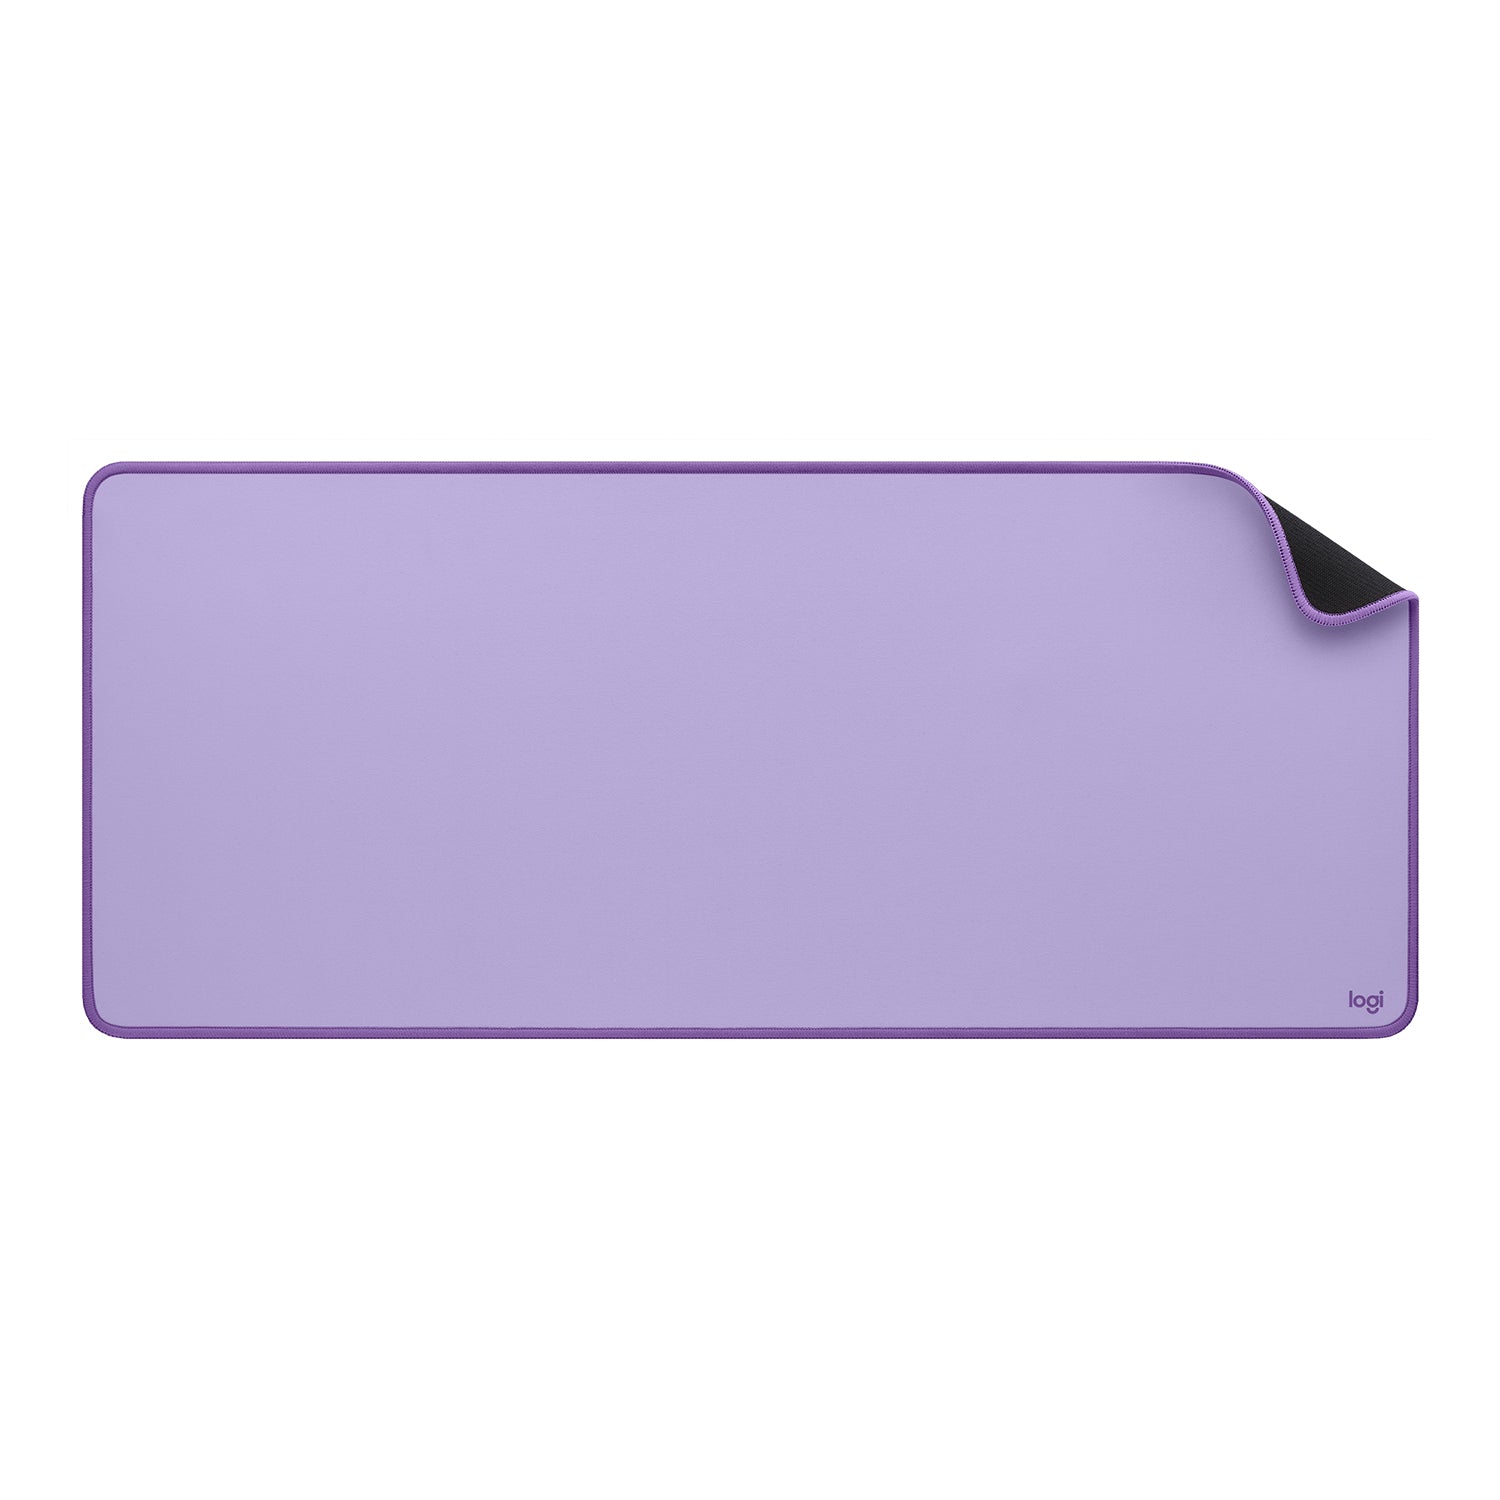 Lavender- Logitech Desk Mat - Studio Series, Multifunctional Large Desk Pad, Extended Mouse Mat, Office Desk Protector with Anti-slip Base, Spill-resistant Durable Design (956-000032)